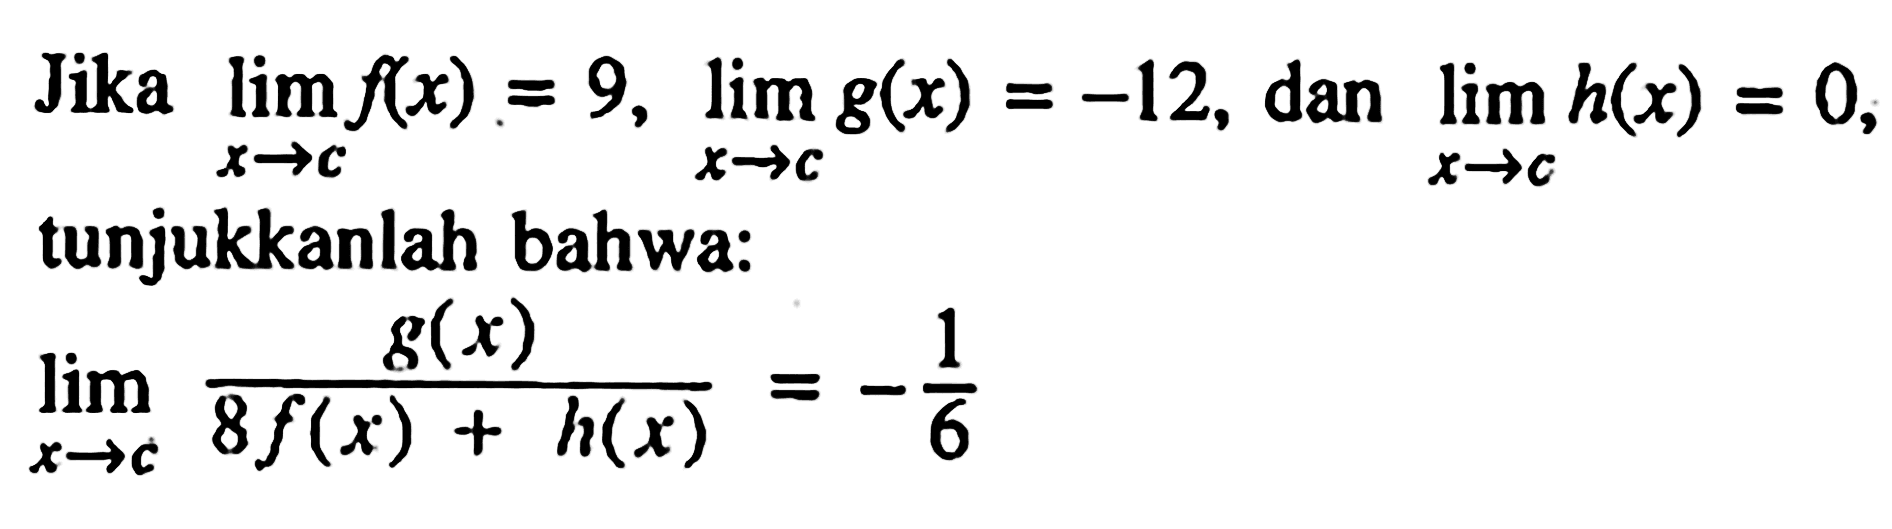 Jika lim x->c f(x) = 9, lim x->c g(x) = -12, dan lim x->c h(x) = 0, tunjukkanlah bahwa: lim x->c g(x)/(8 f(x) + h(x)) = -1/6